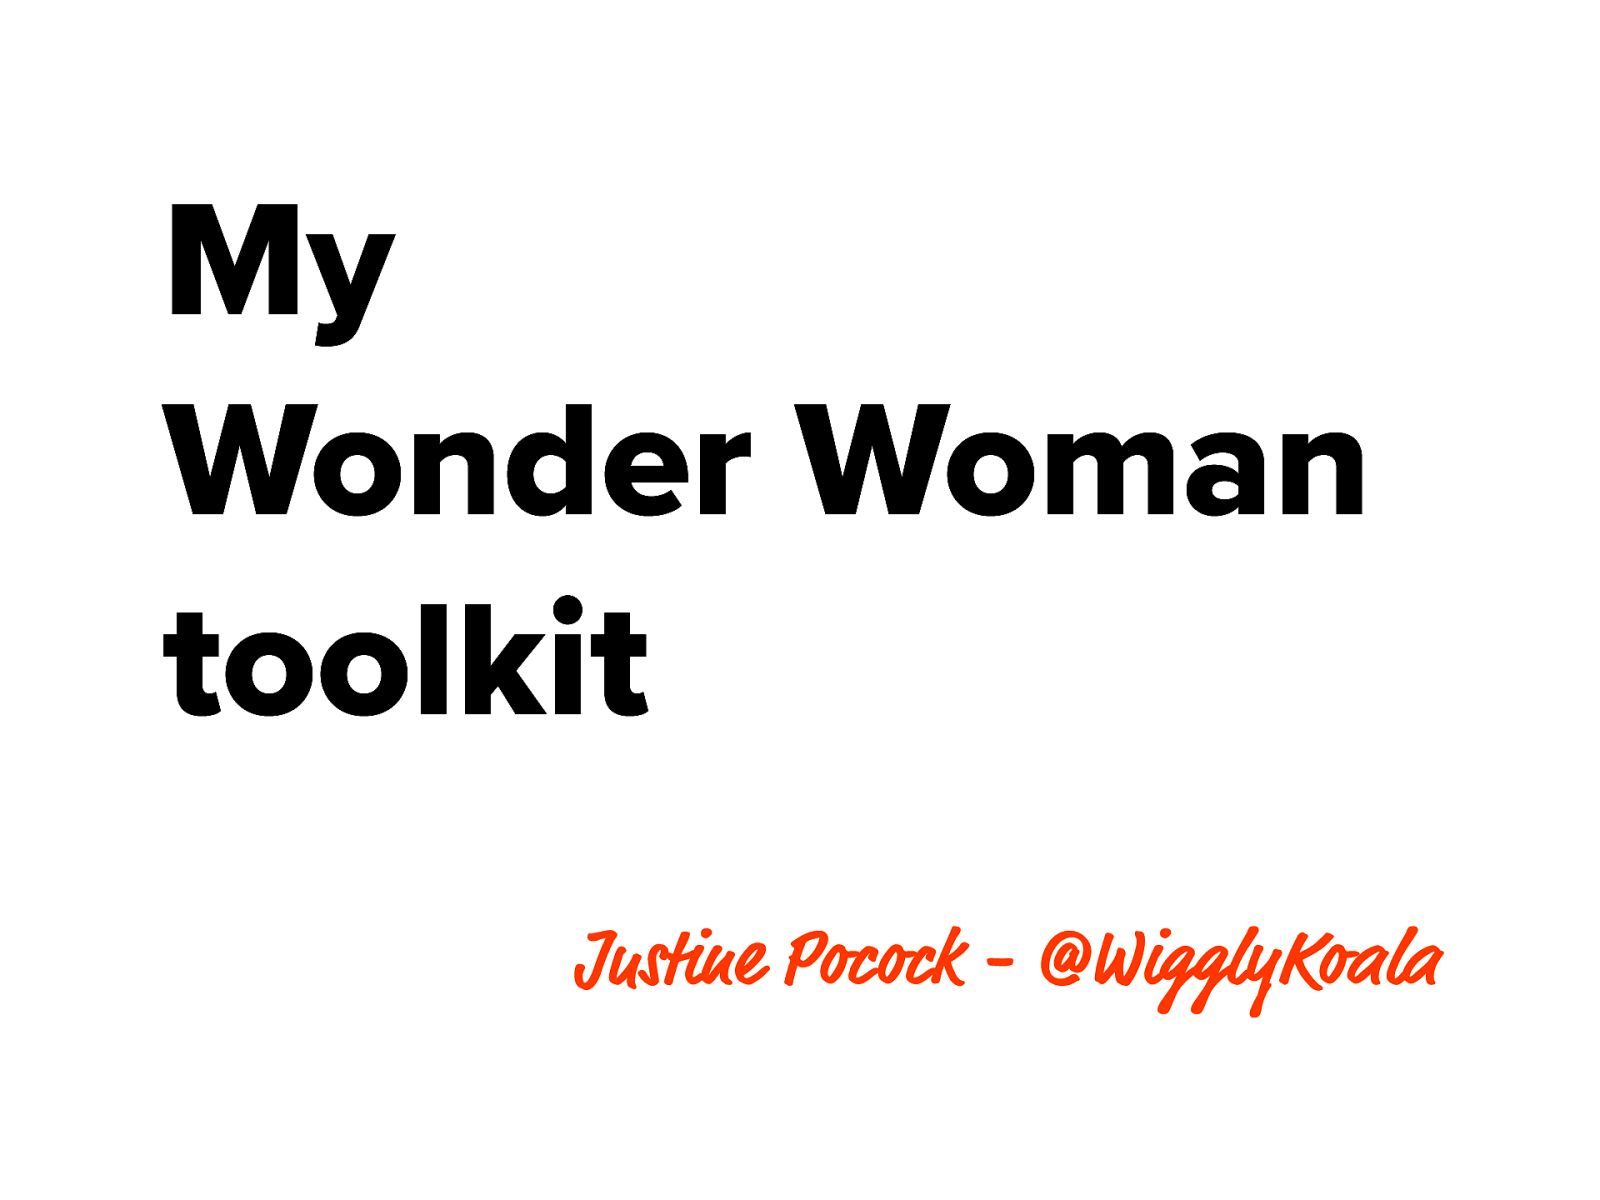 My Wonder Woman toolkit